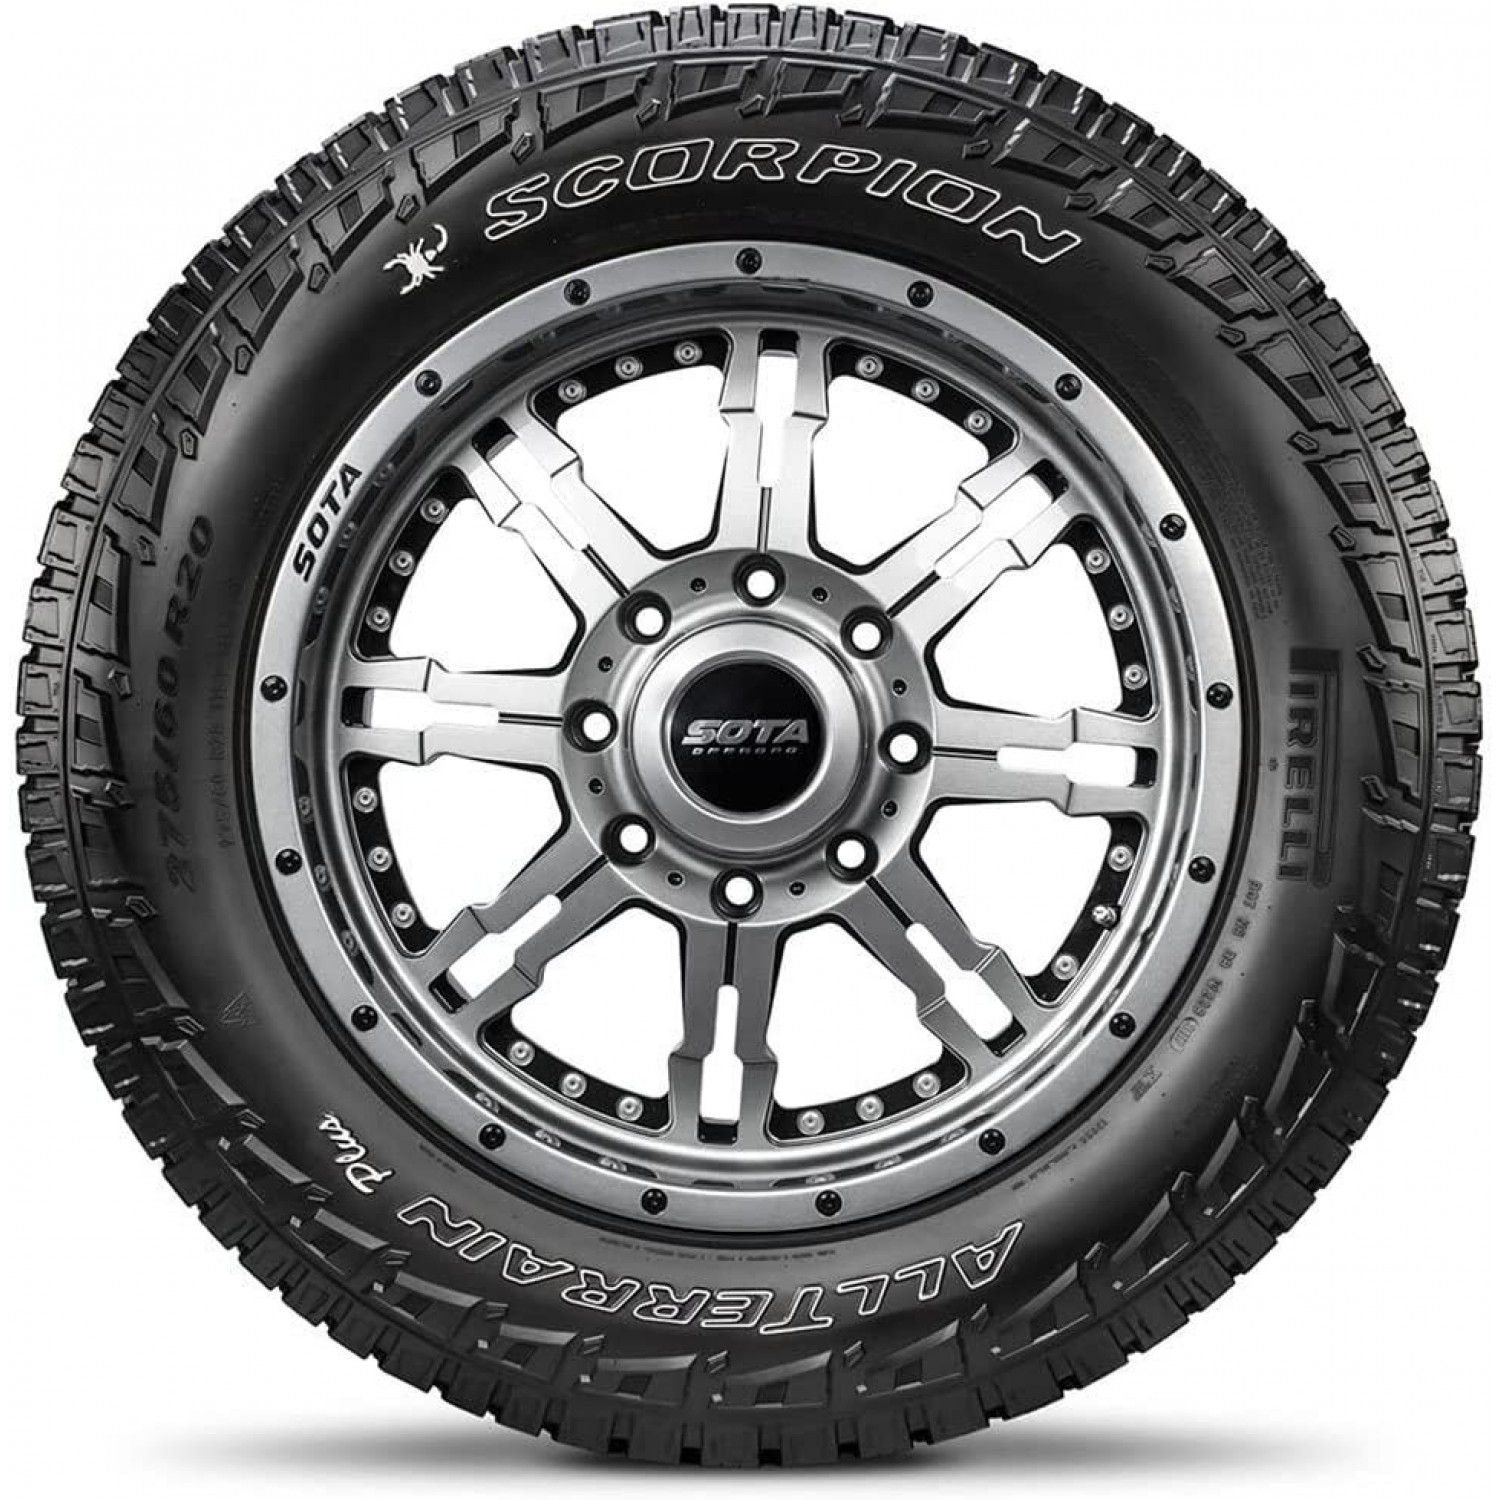 Pirelli Scorpion All Terrain Plus Raised White Letters Tire (265/65R18  114T) vzn121975